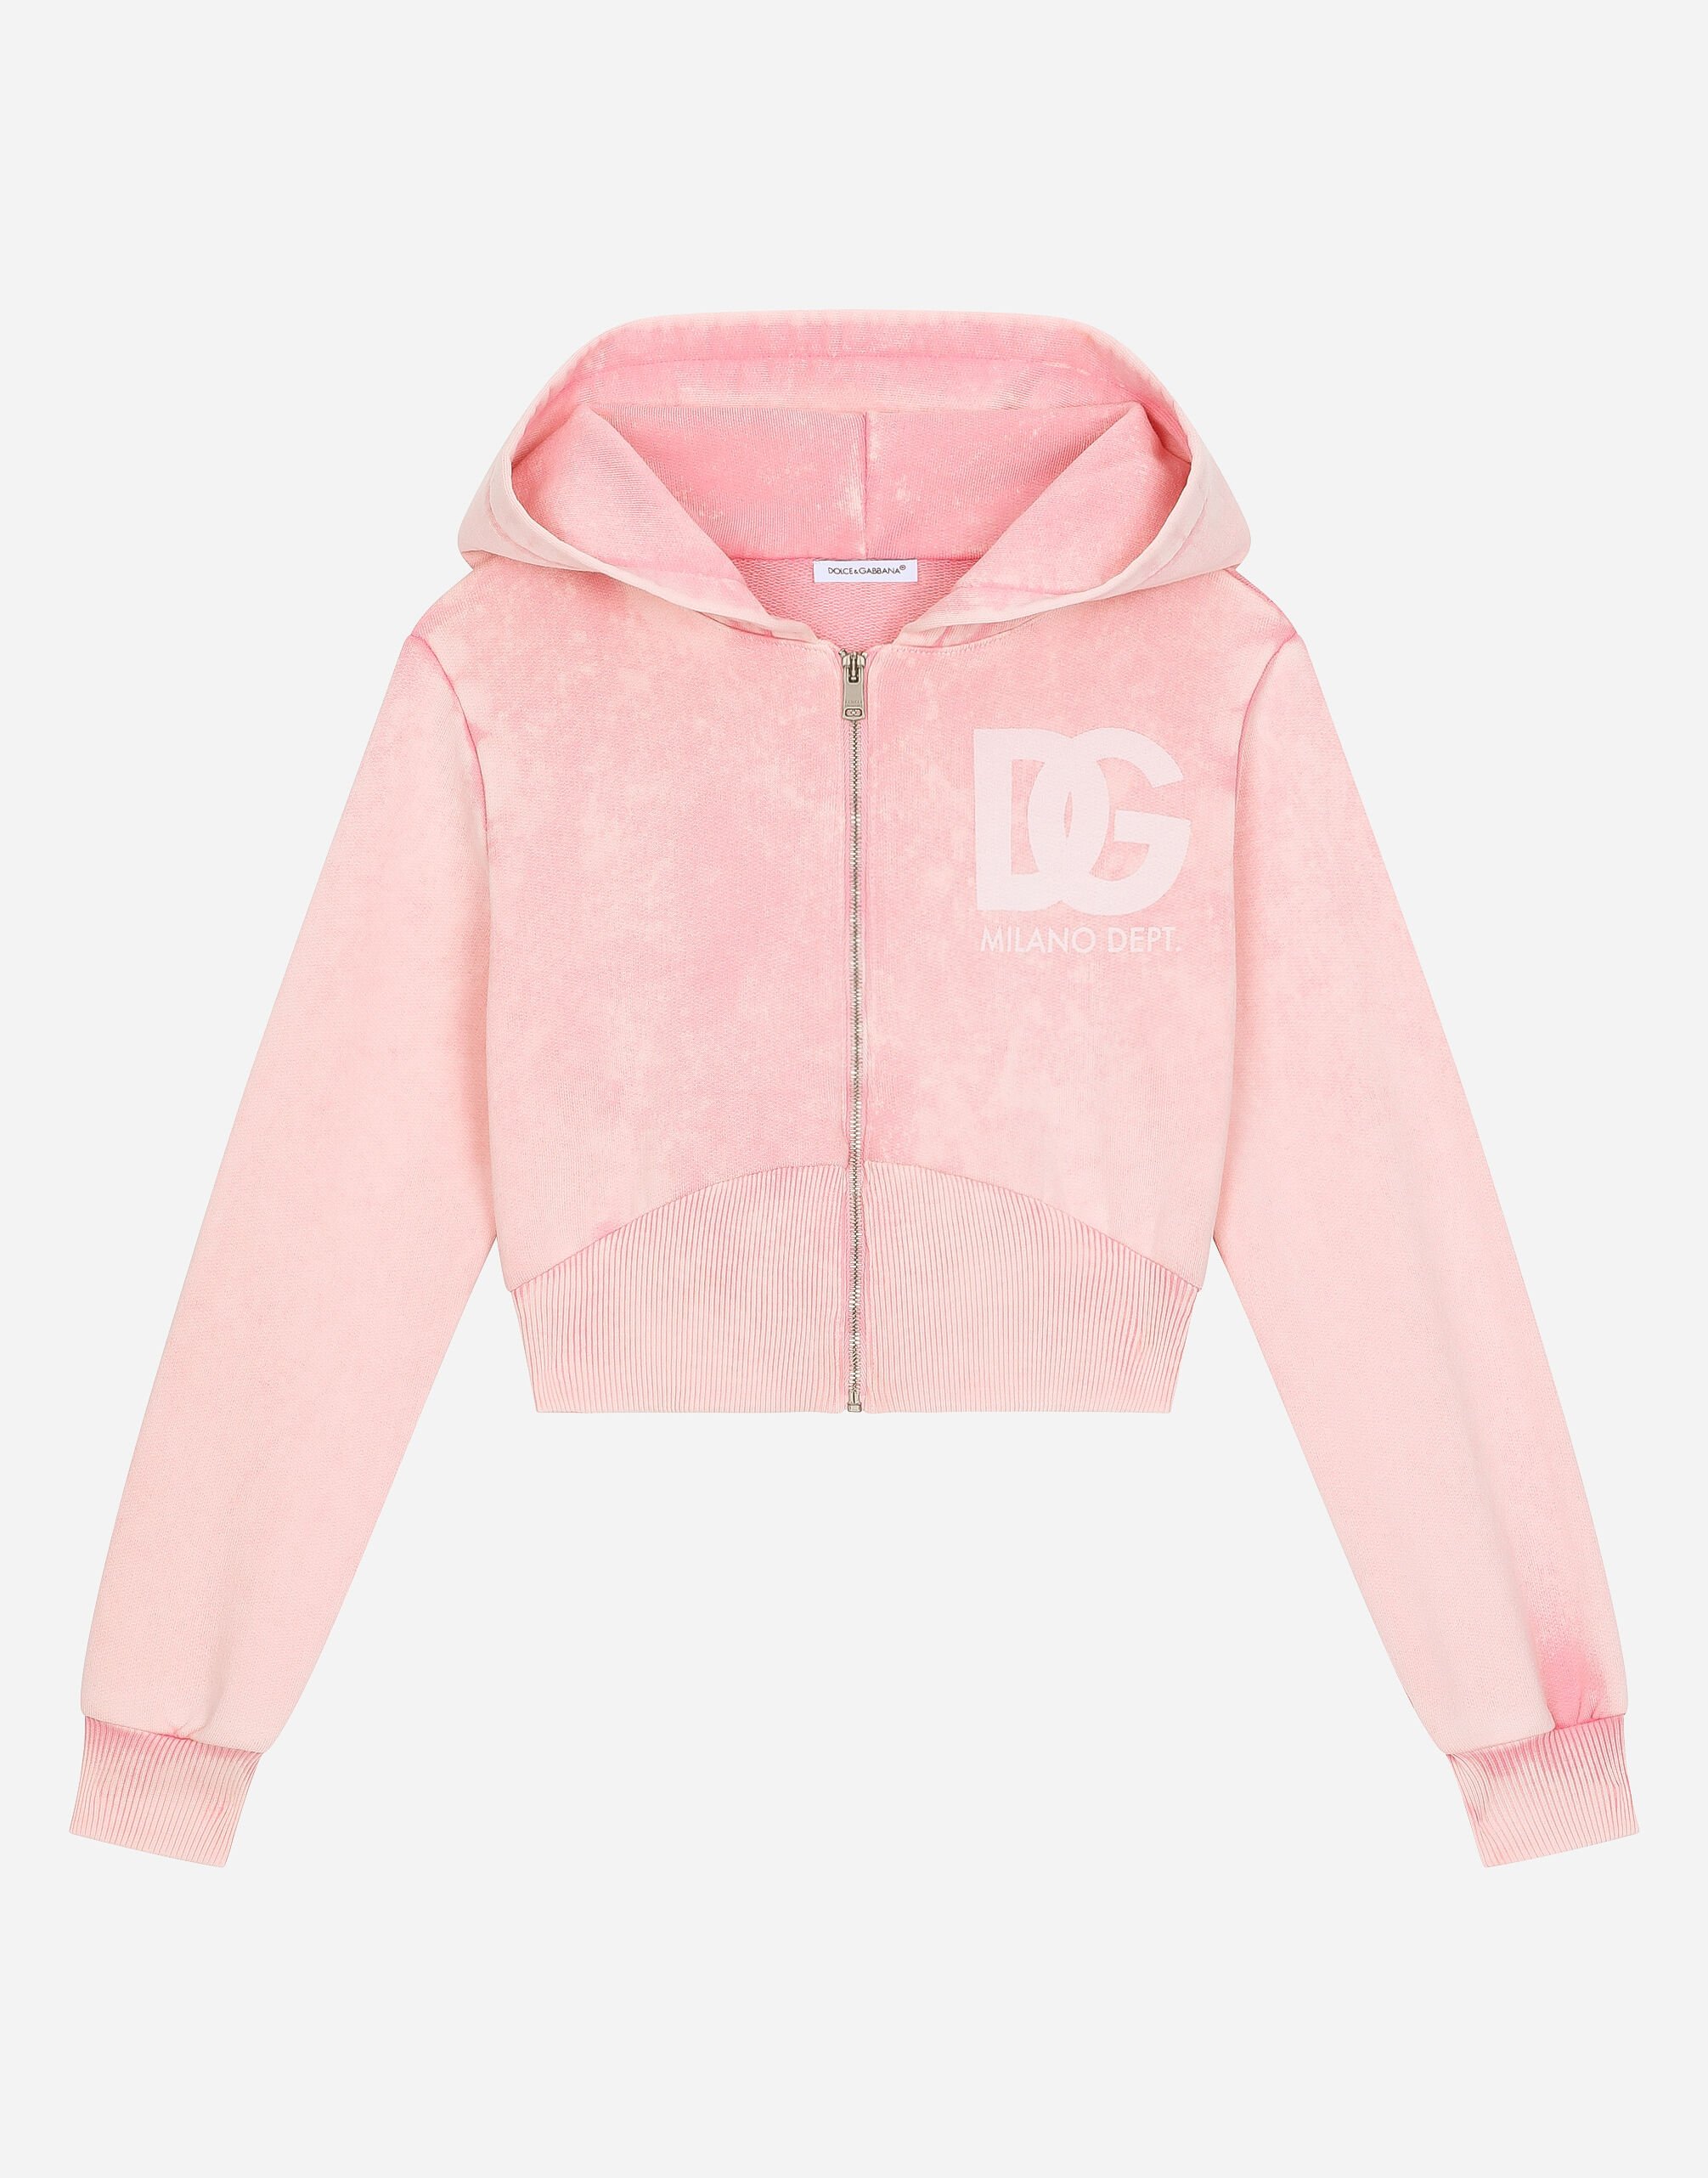 Dolce & Gabbana Zip-up hoodie with DG logo Print L5JTMEG7K4F